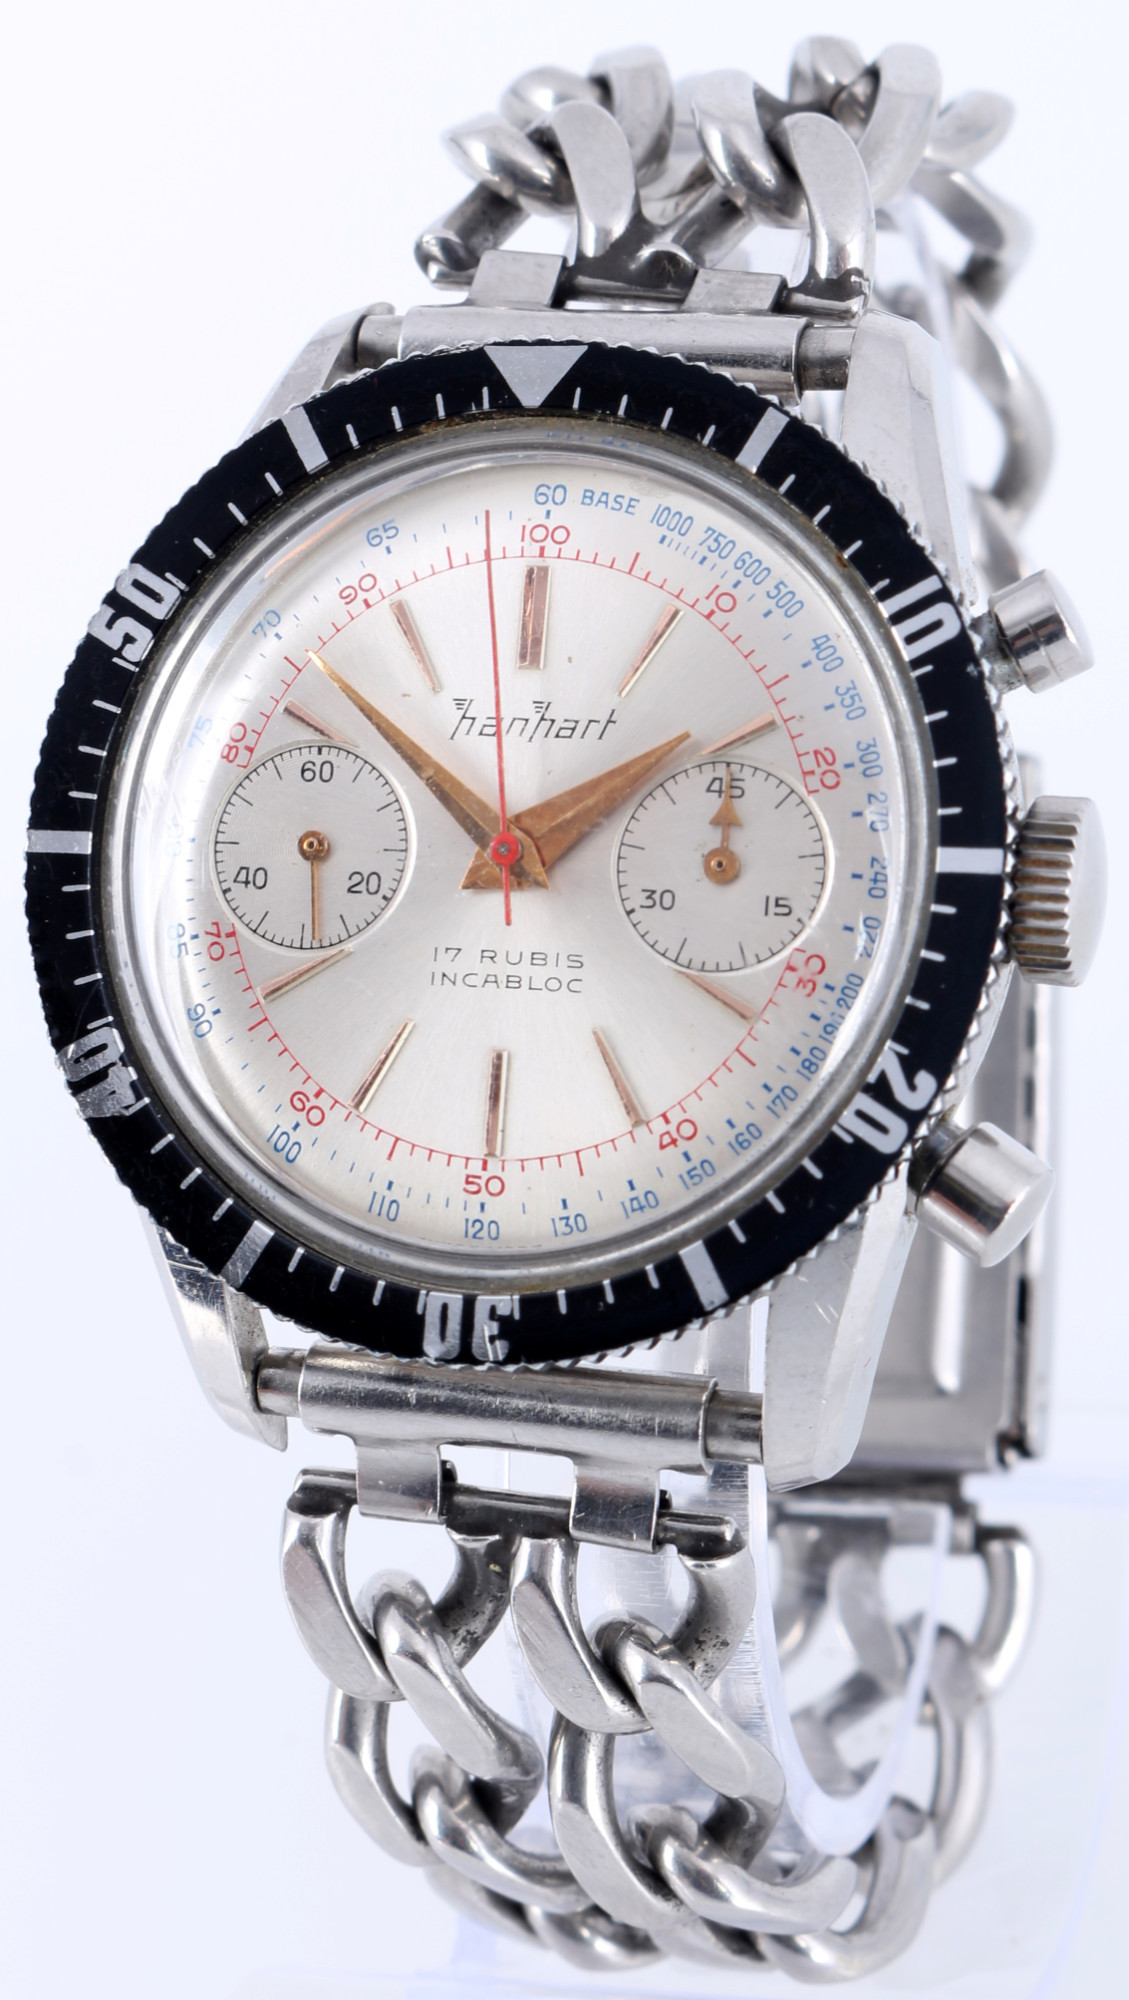 Hanhart Chronograph Pilot's Watch 415 ES with Lemania movement,